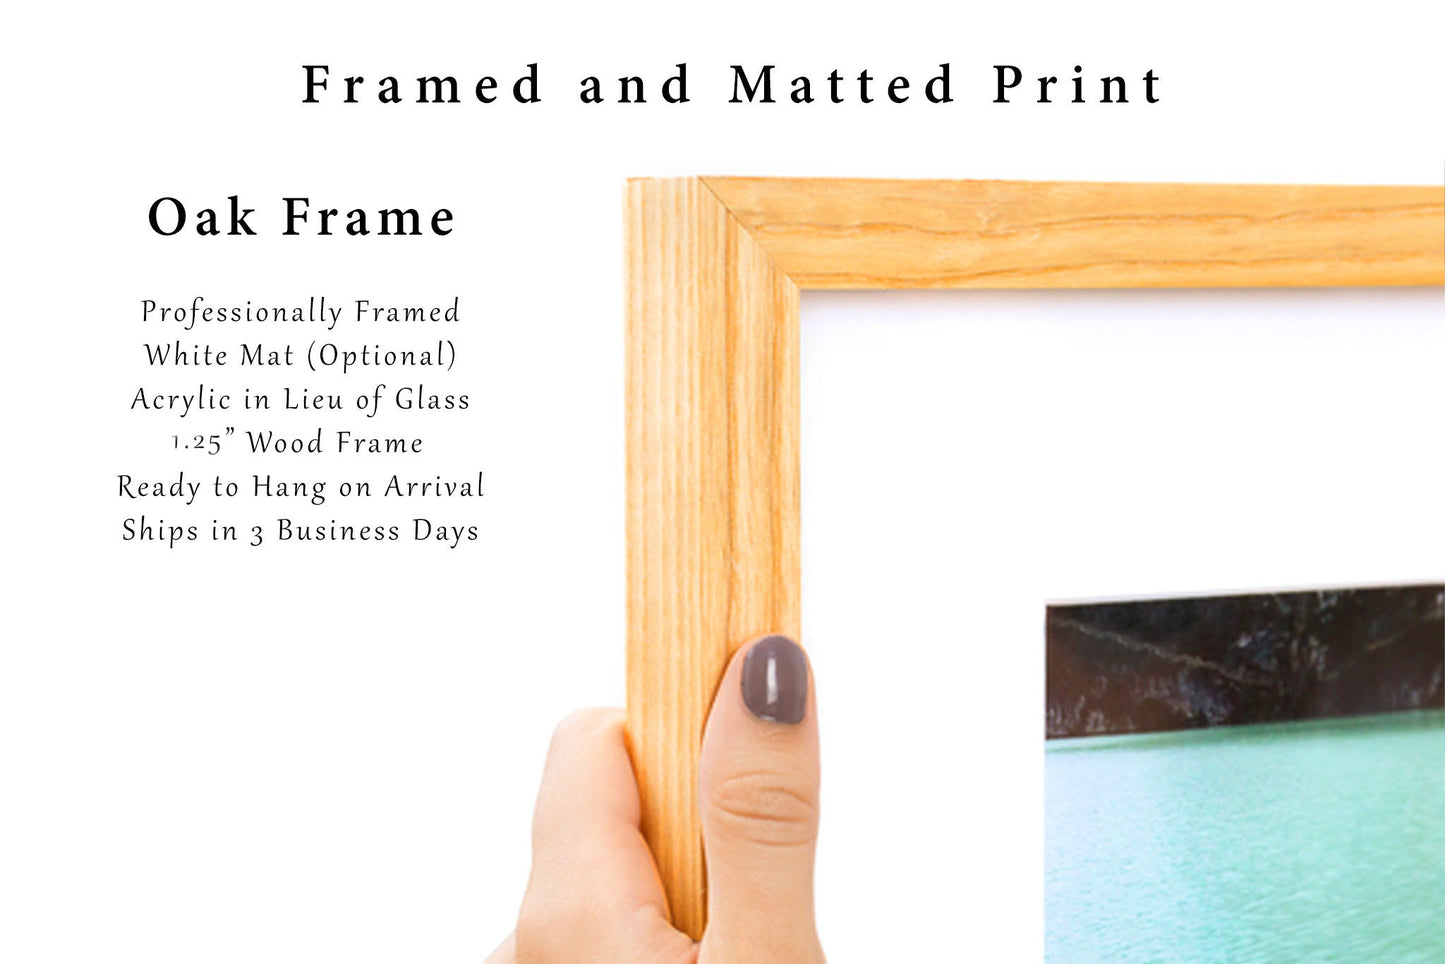 Angel Oak Tree Framed and Matted Print | Lowcountry Photo | Charleston South Carolina Decor | Southern Photography| Nature Wall Art | Ready to Hang